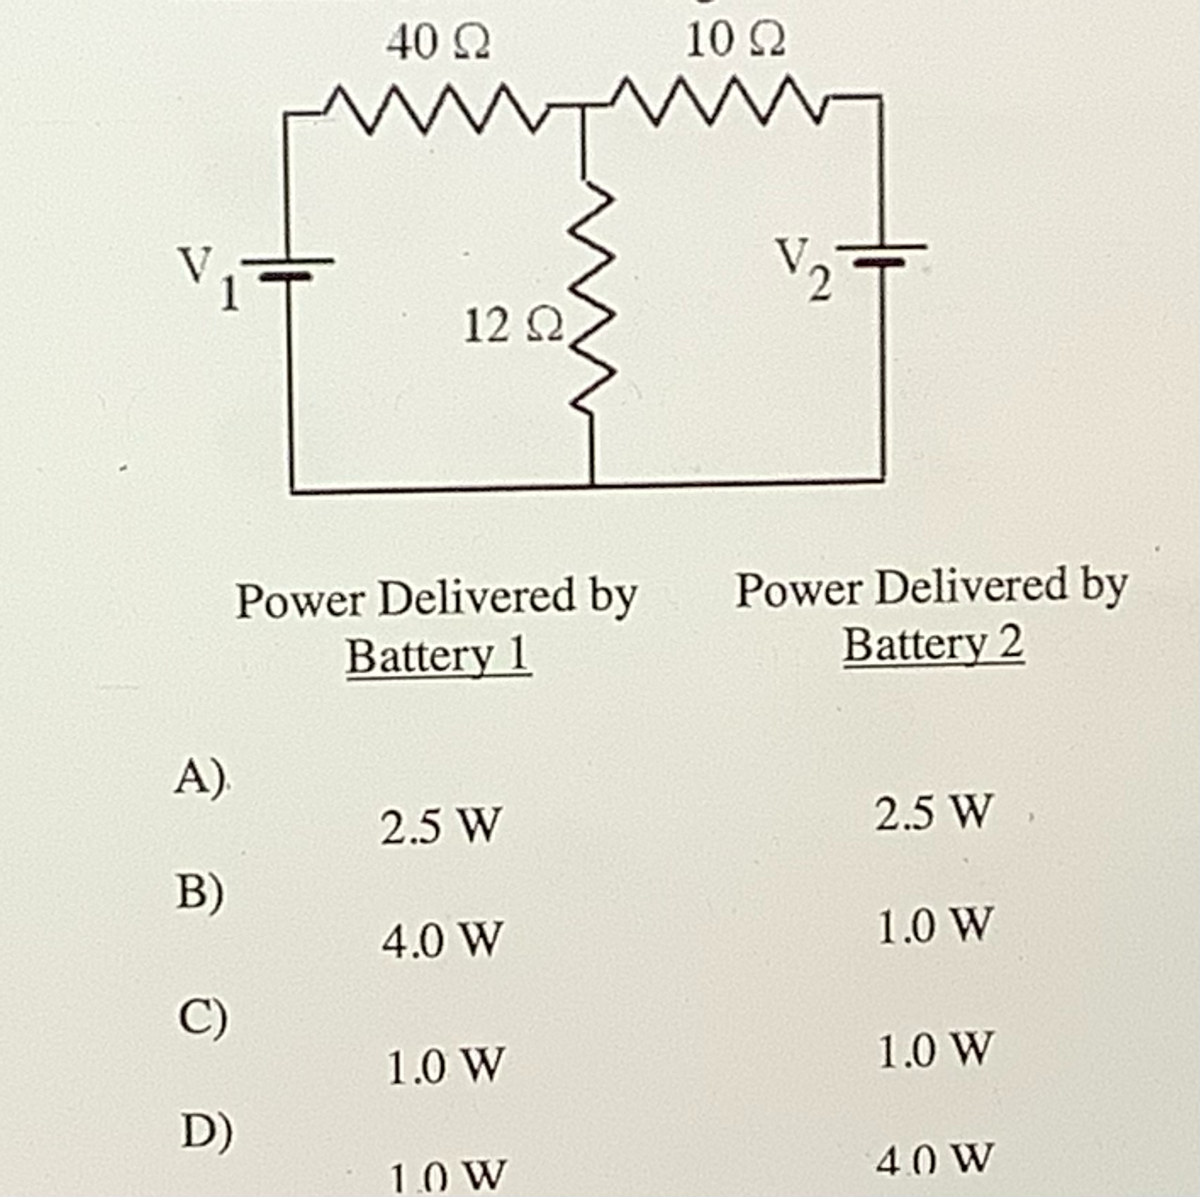 40 2
10 2
V1
V2=
12 Q
Power Delivered by
Battery 1
Power Delivered by
Battery 2
A).
2.5 W
2.5 W
B)
4.0 W
1.0 W
C)
1.0 W
1.0 W
D)
1.0 W
40 W
